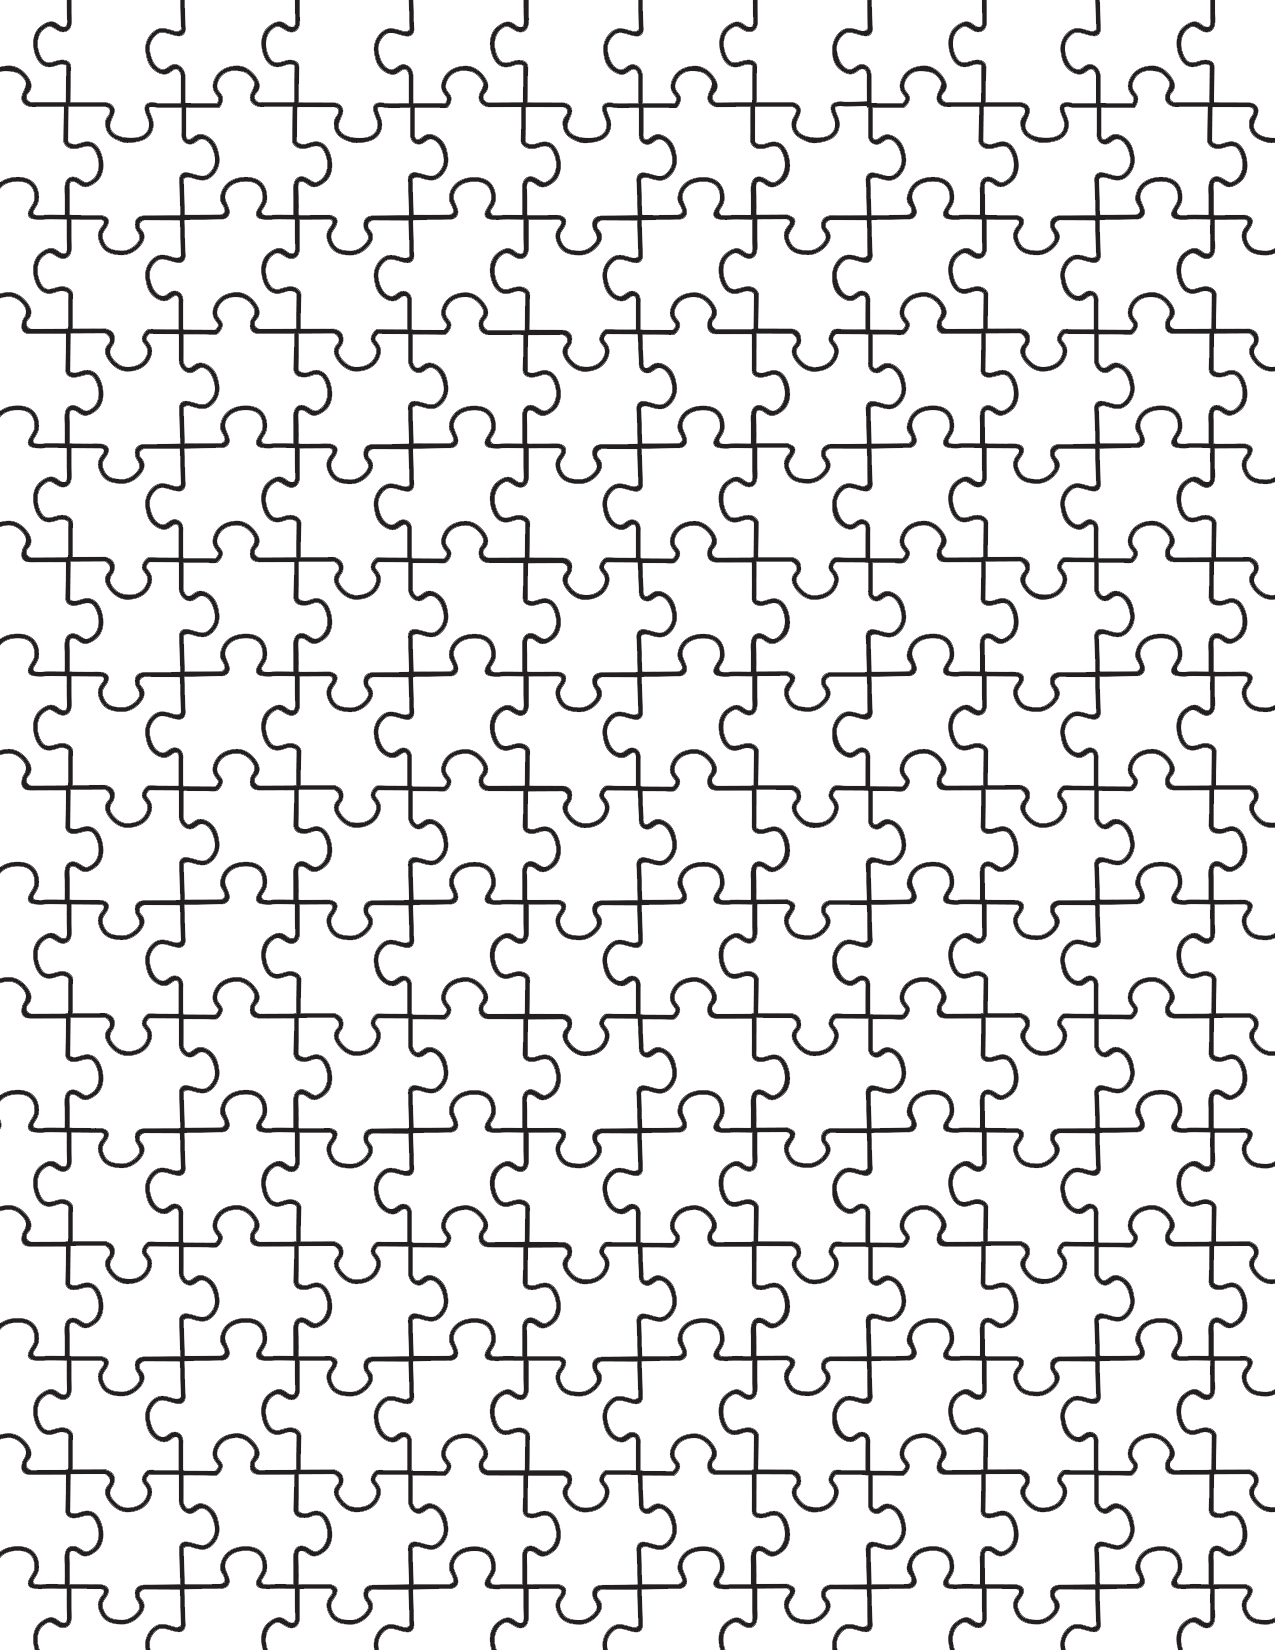 174158-1275x1650-Puzzle-pieces 